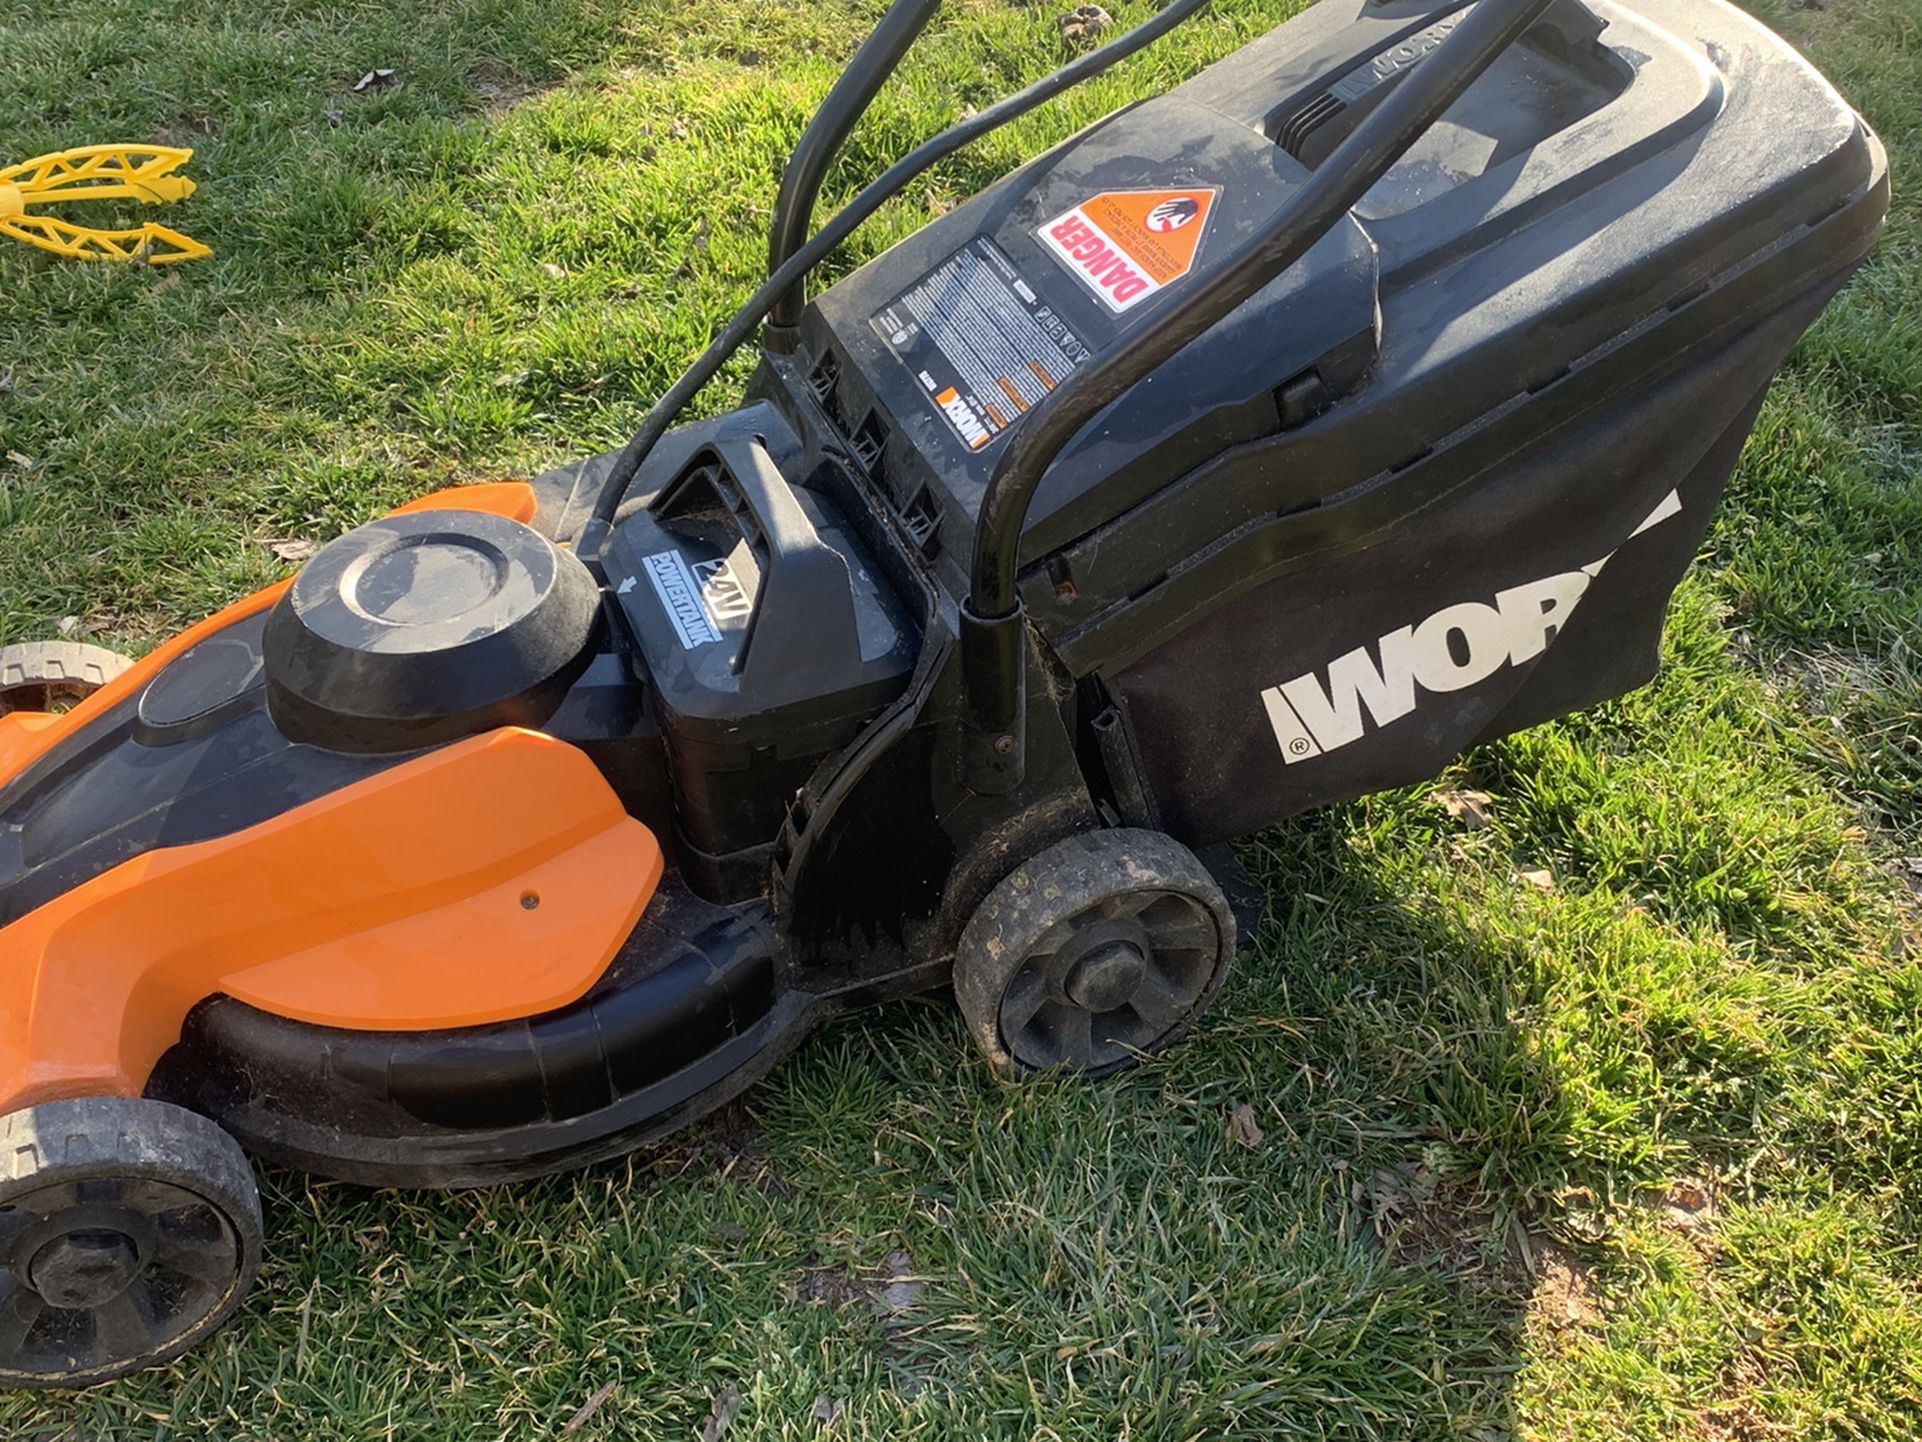 Worx electric Lawn Mower